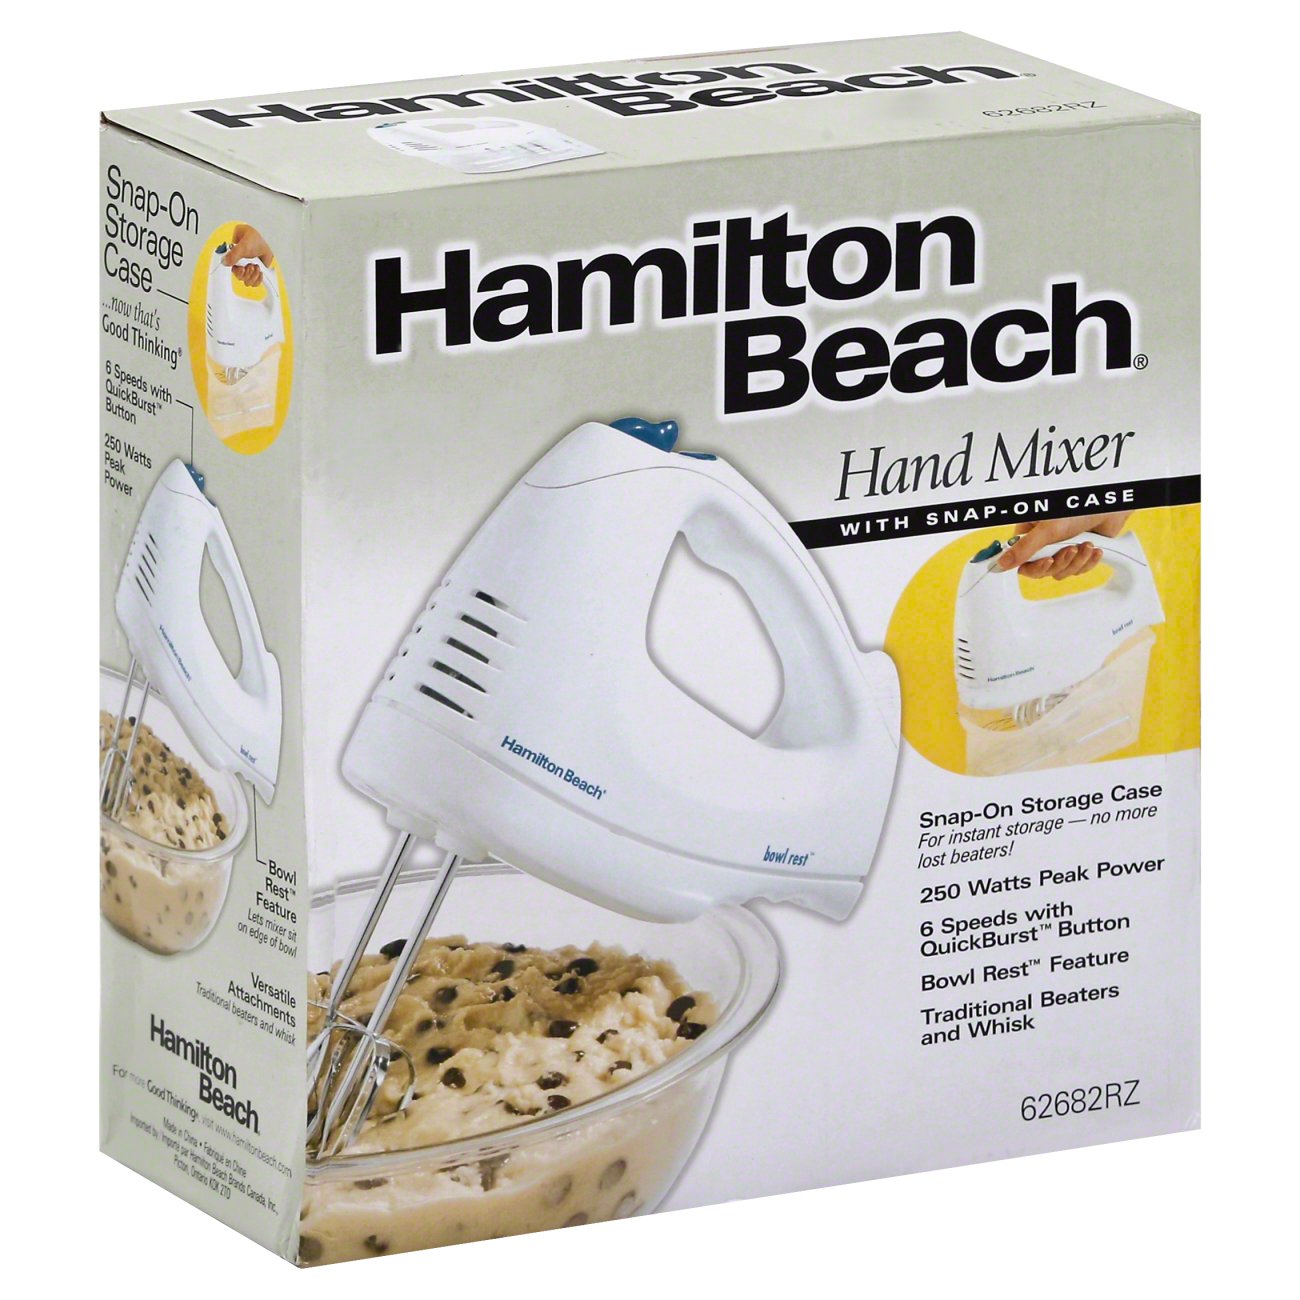 Hamilton Beach Hand Mixer With Snap-On Case